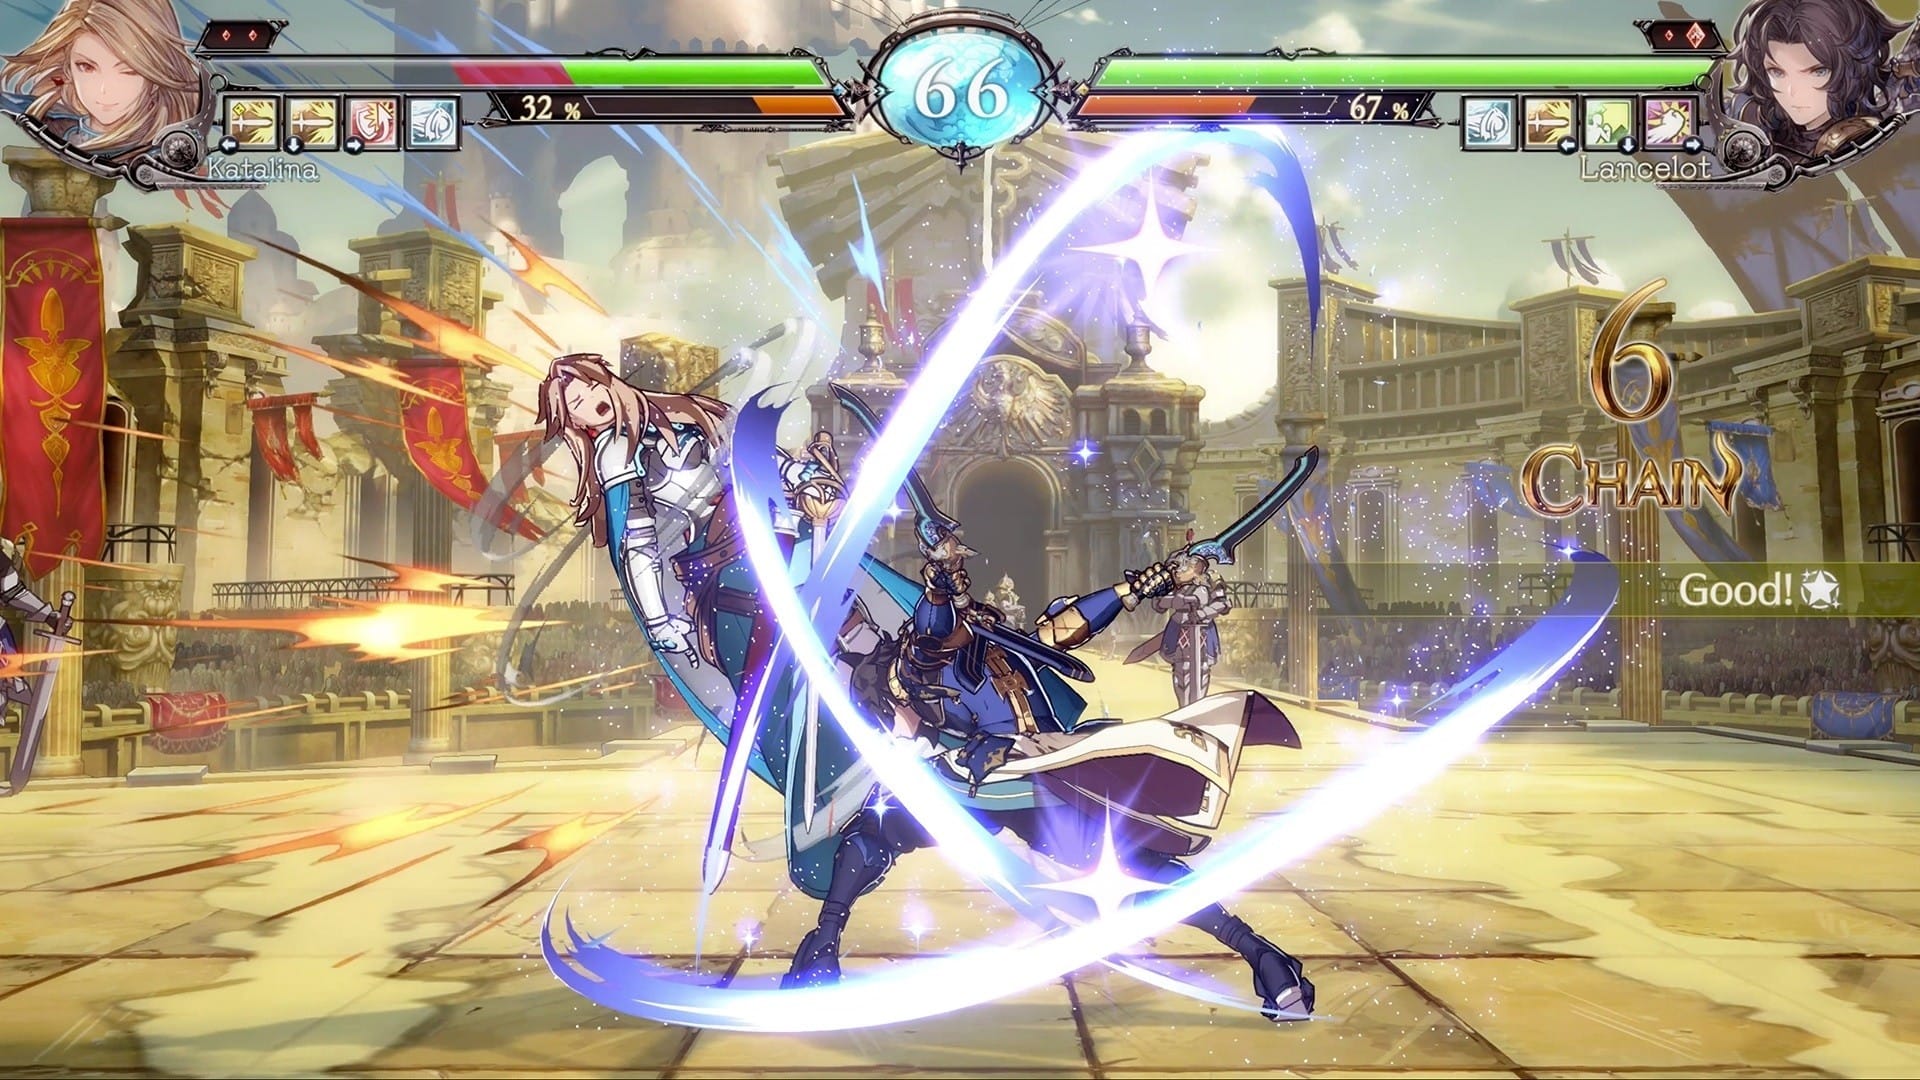 Lancelot's blue flashing blades attack Katalina